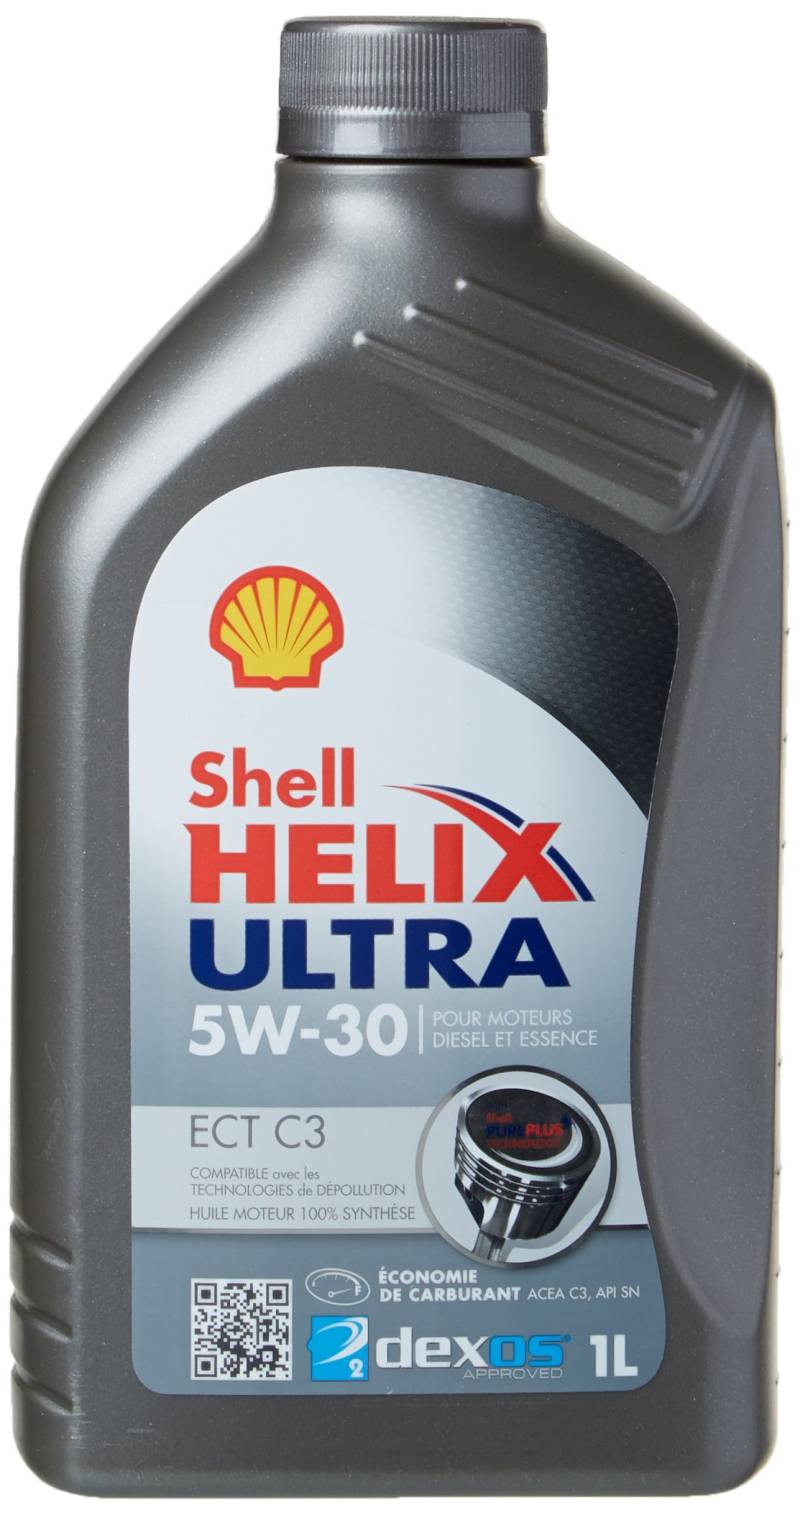 Shell HELIX ULTRA ECT C3 Motorenöl, 1L von Shell